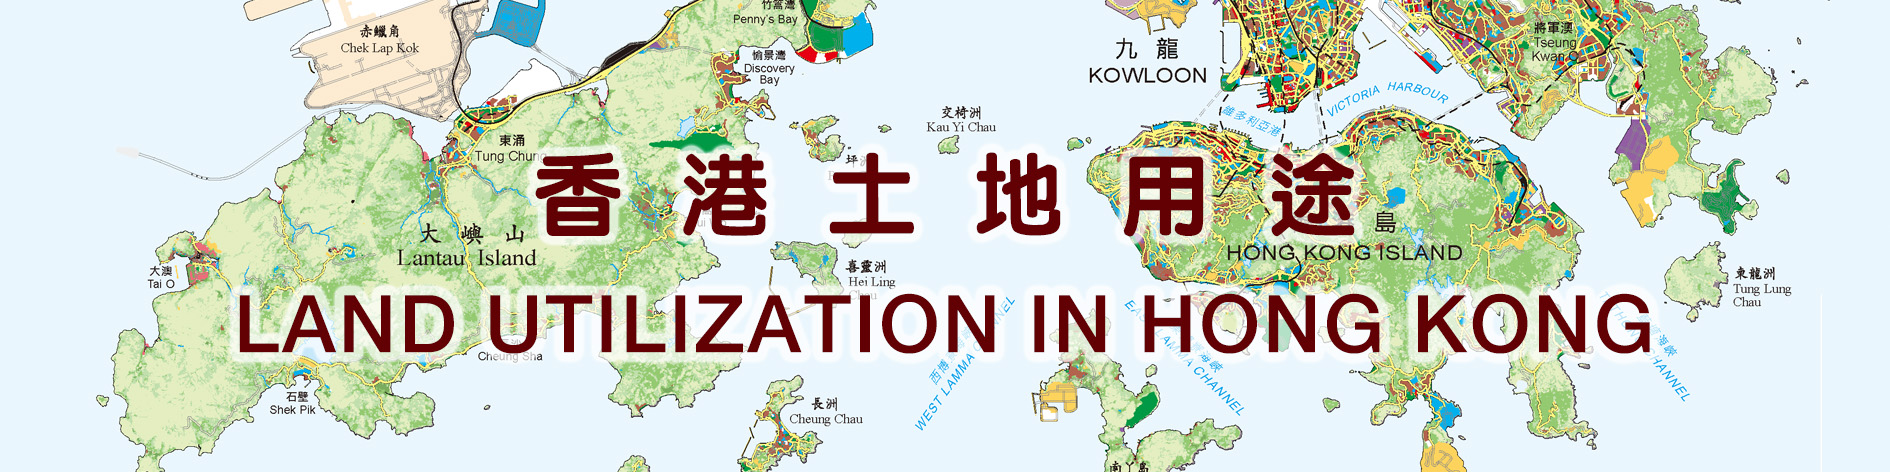 Land Utilization Map